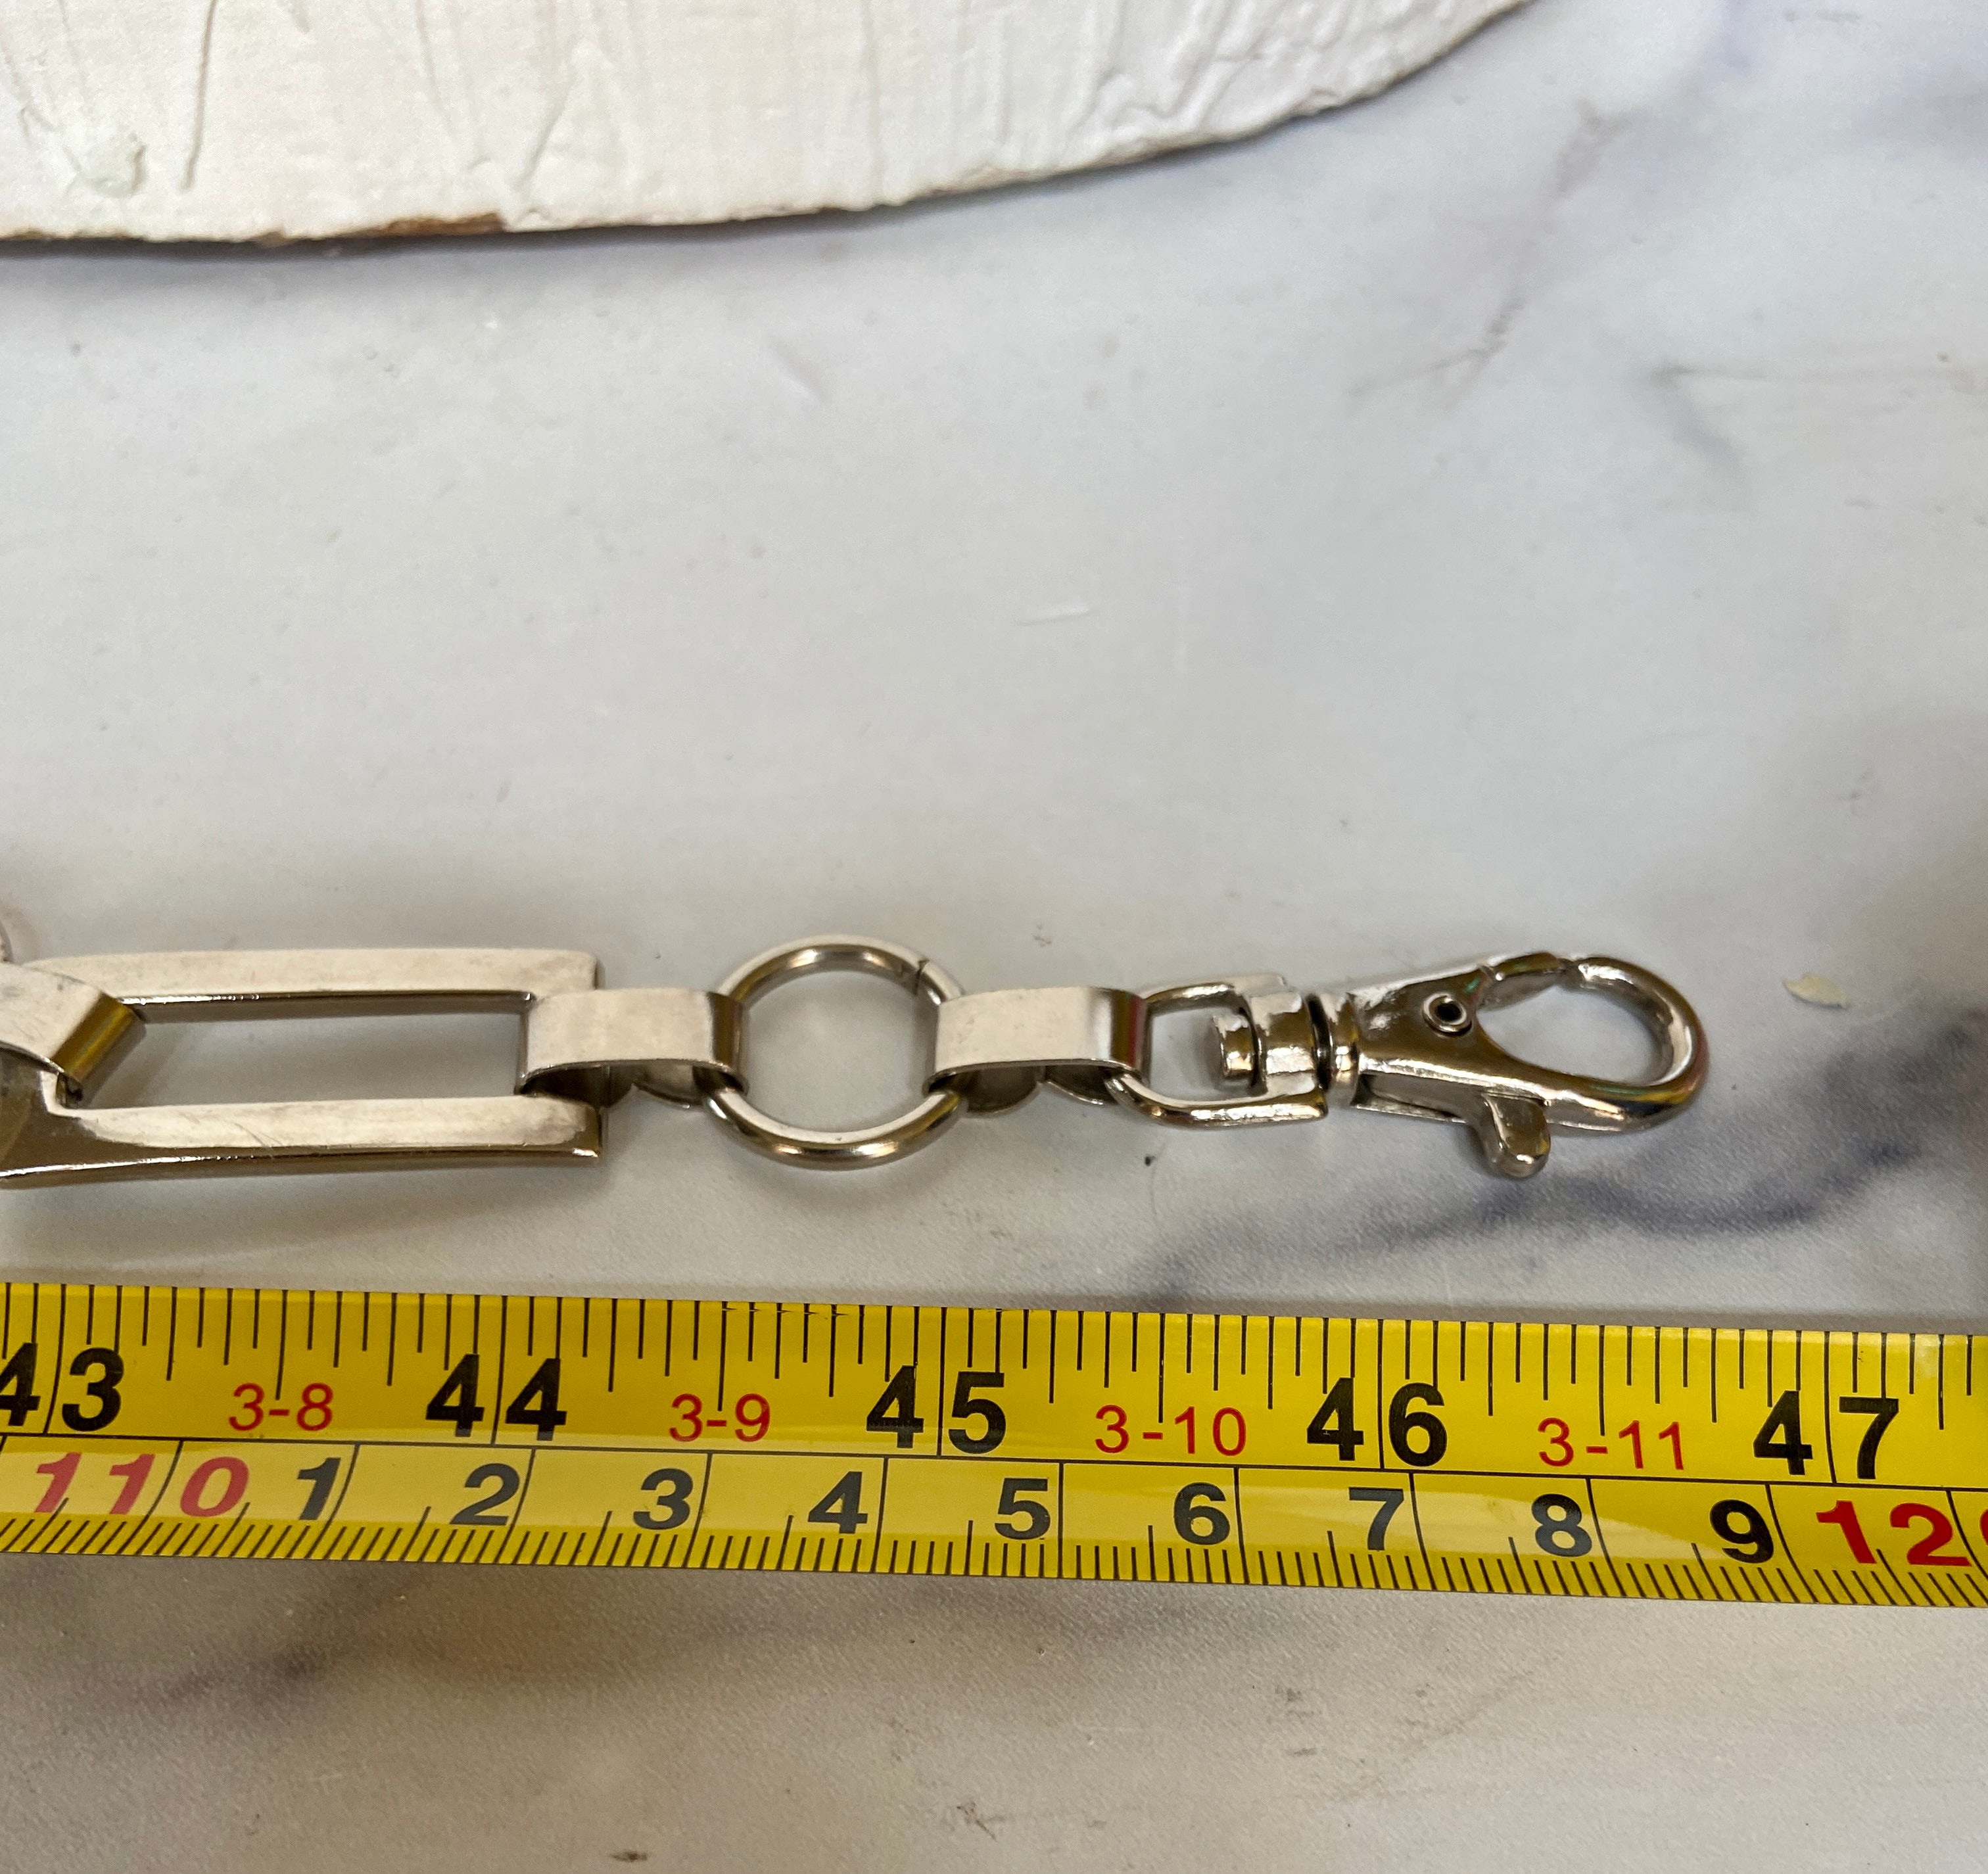 Silver metal waist chain belt